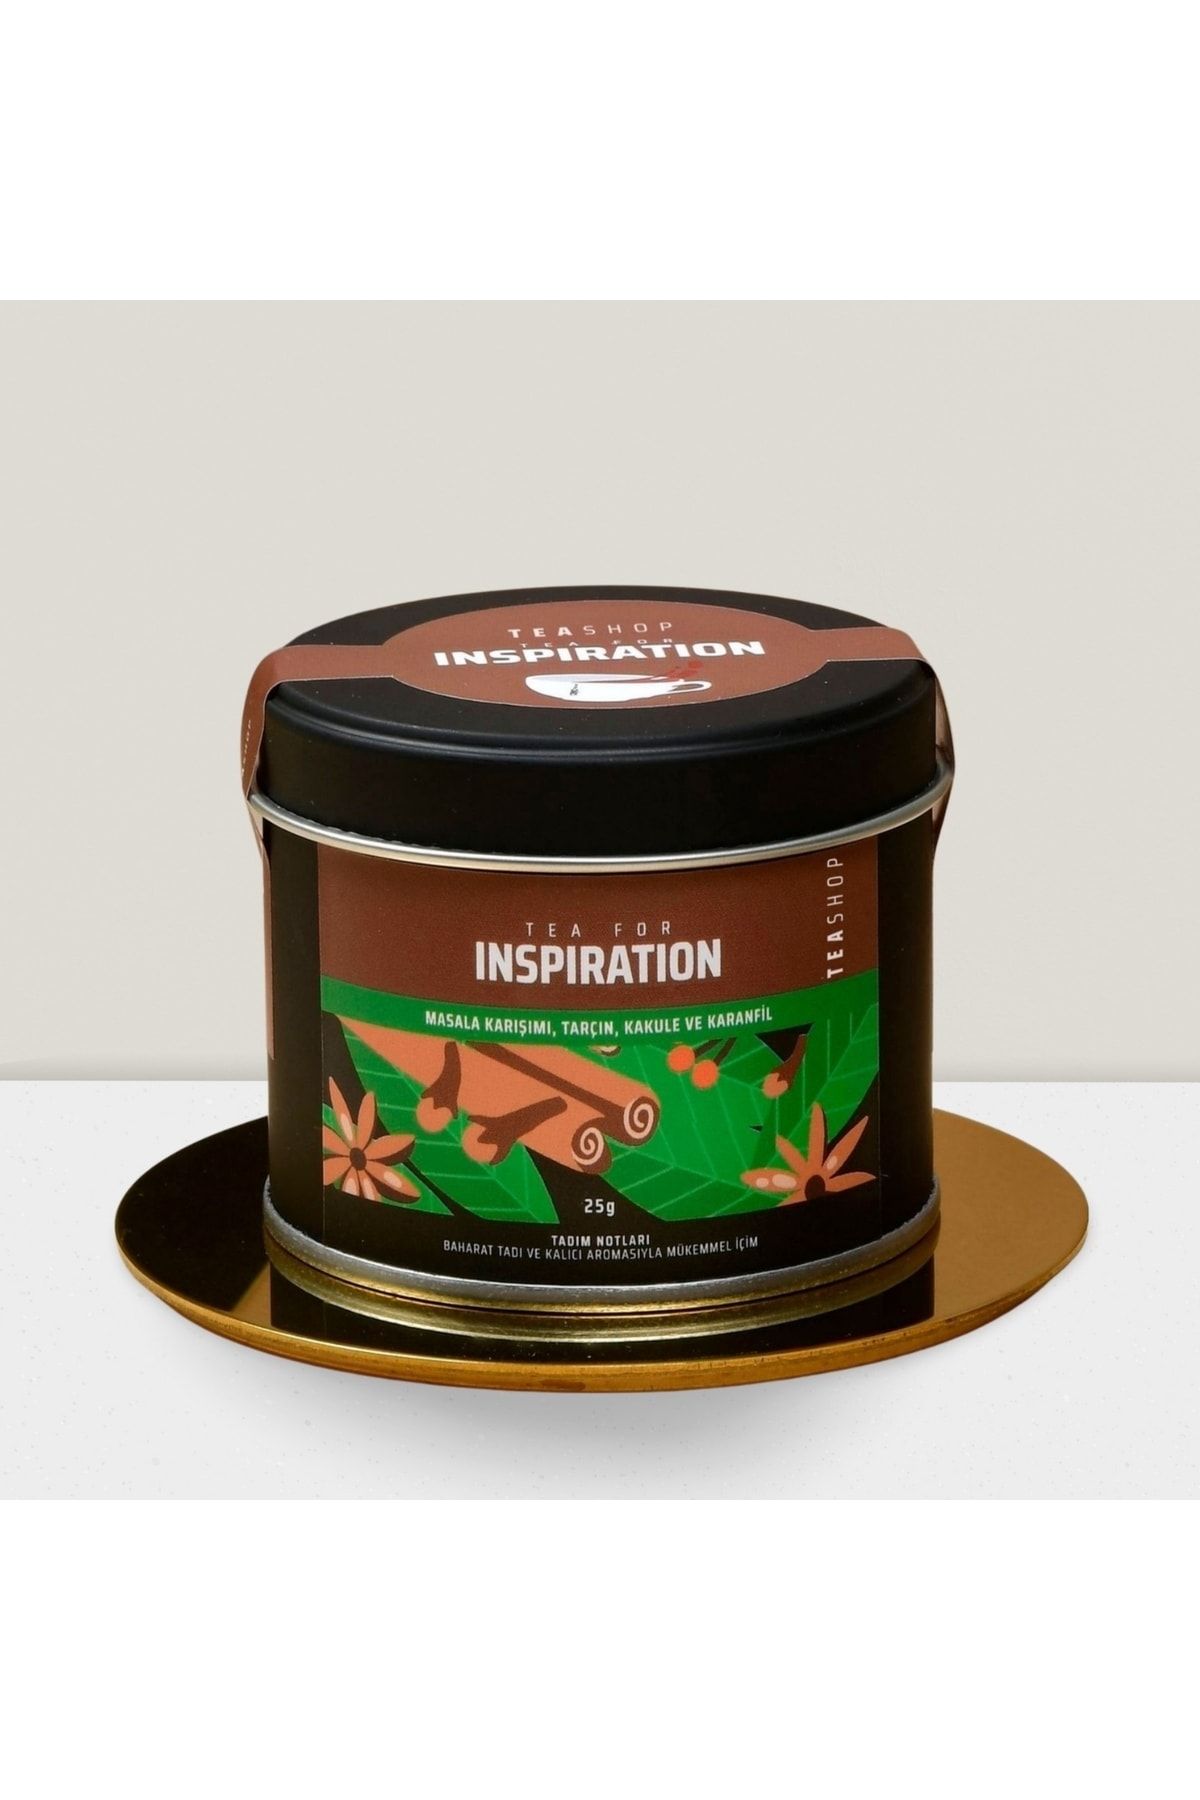 TeaShop Inspiration Tea - Masala Çay Harmanı - 25g Premium